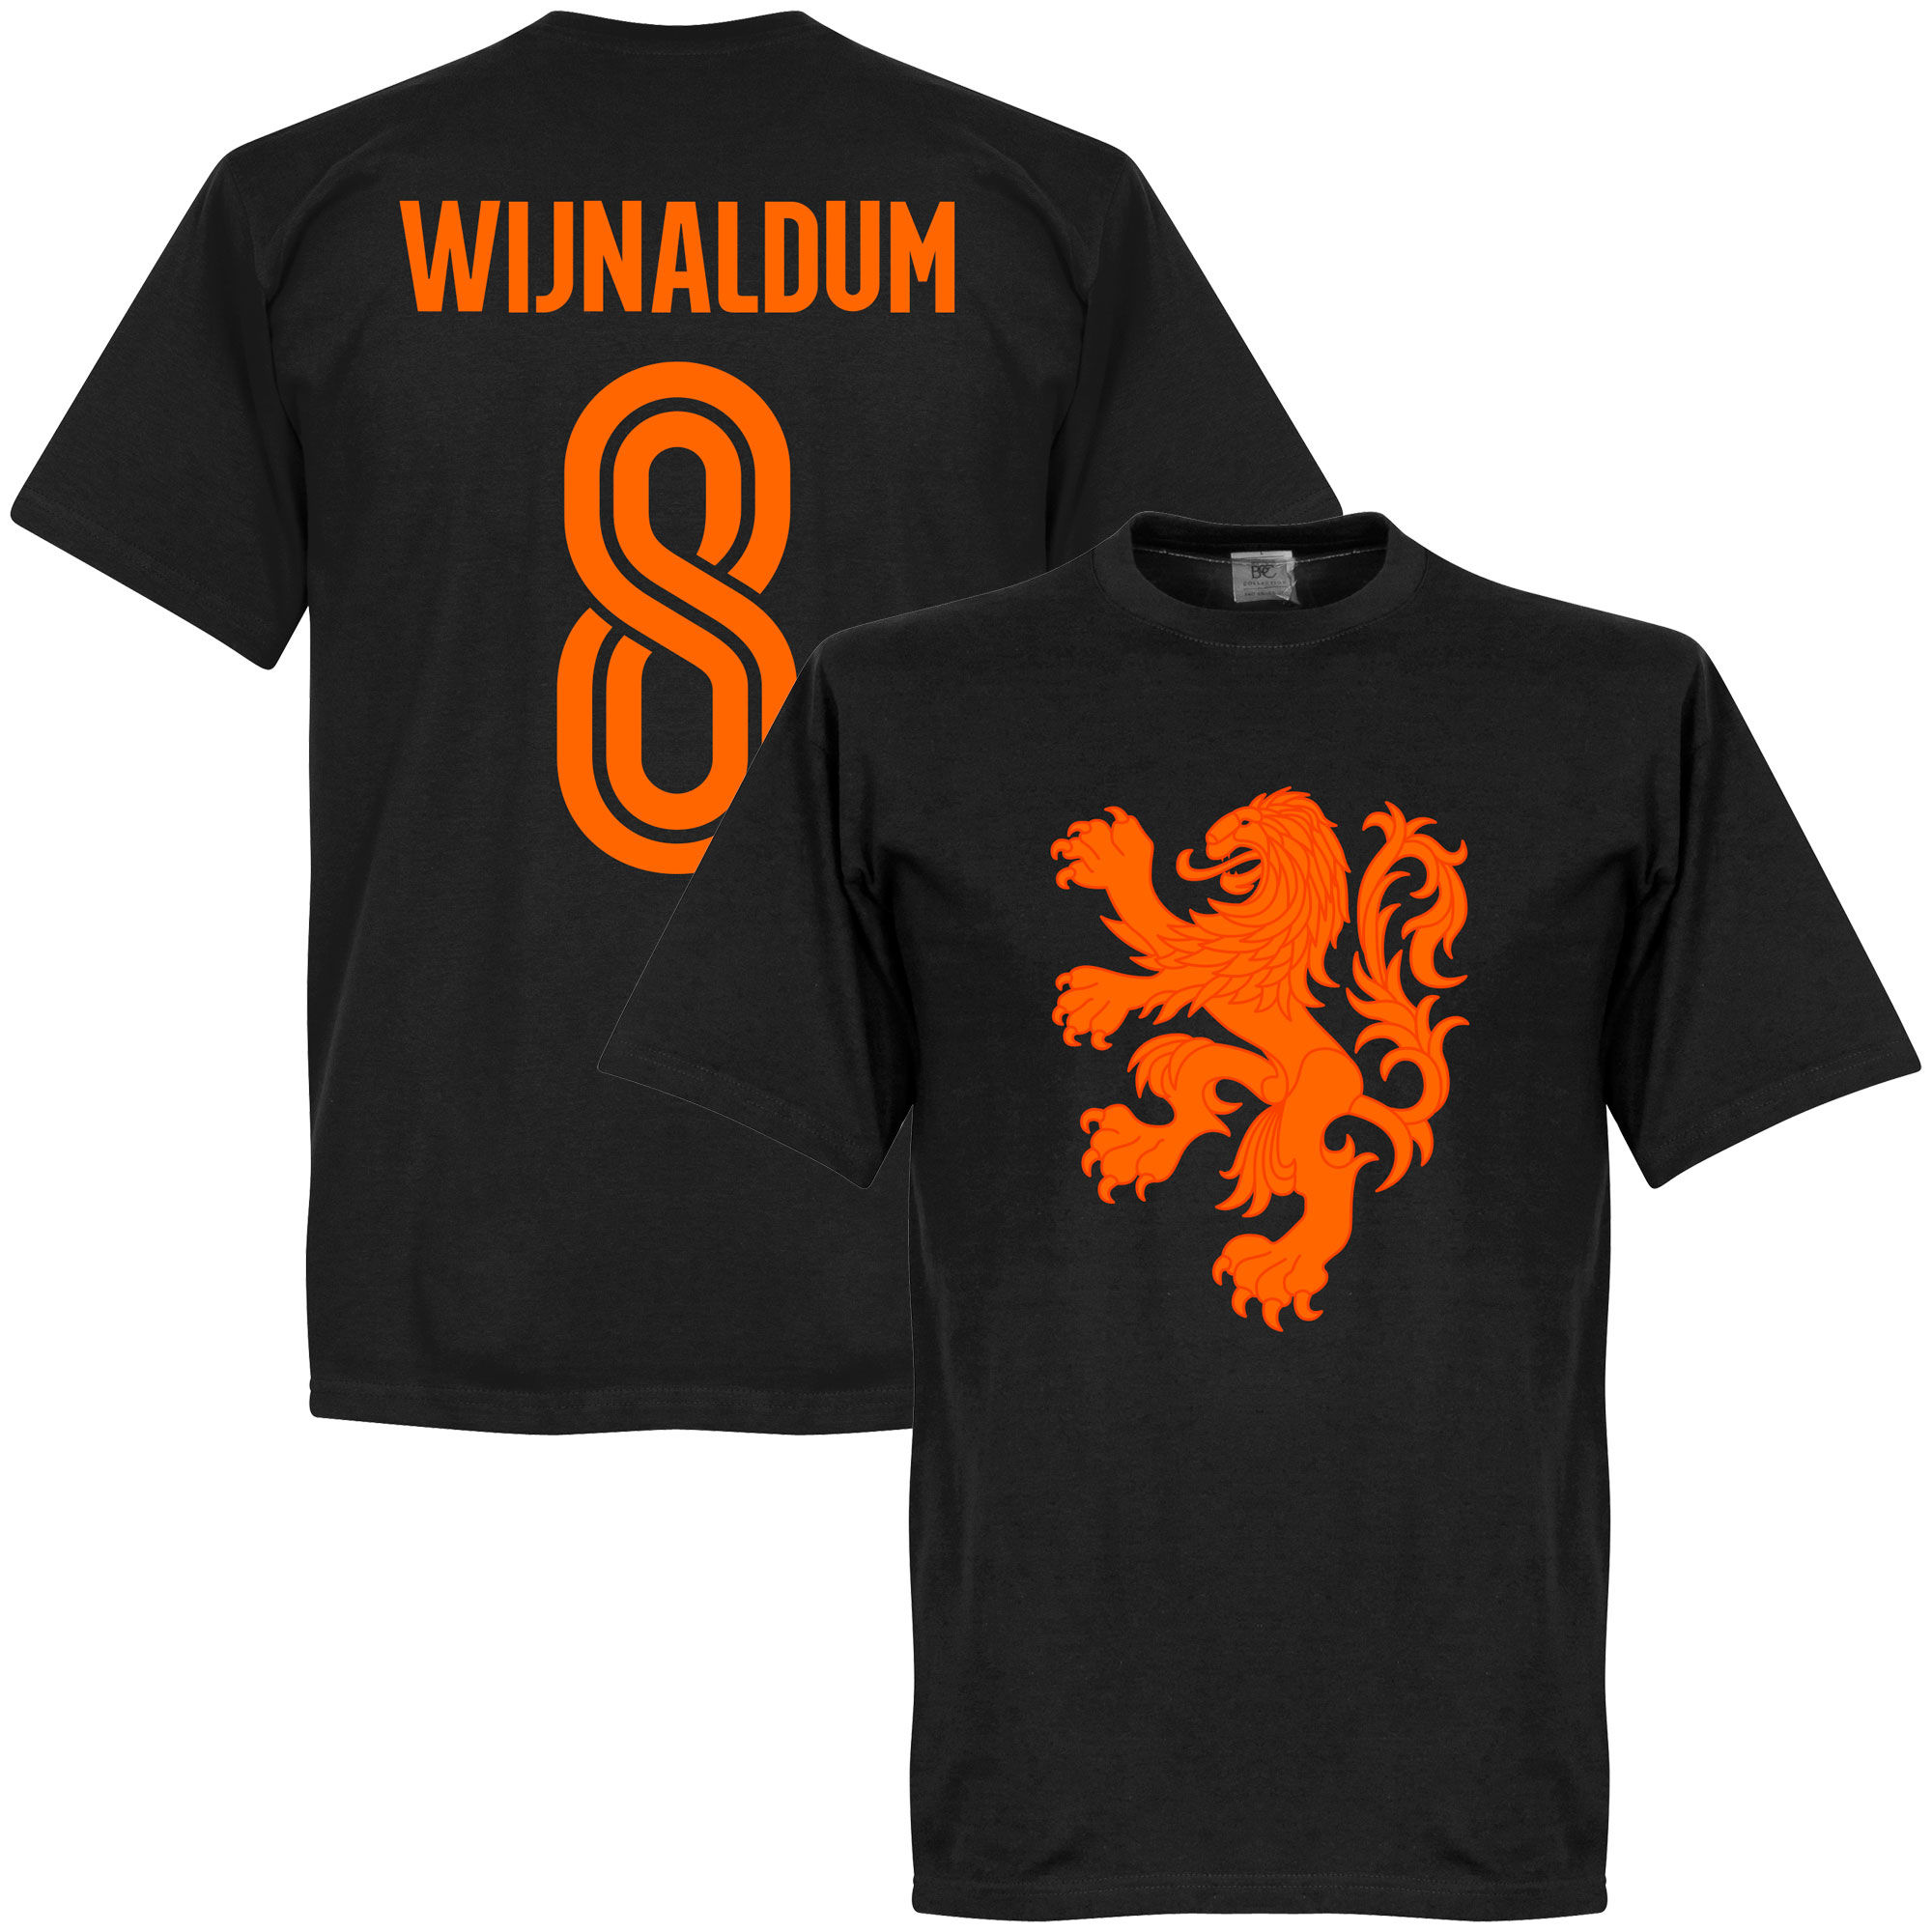 Nizozemí - Tričko "Lion" - Georginio Wijnaldum, číslo 8, černé